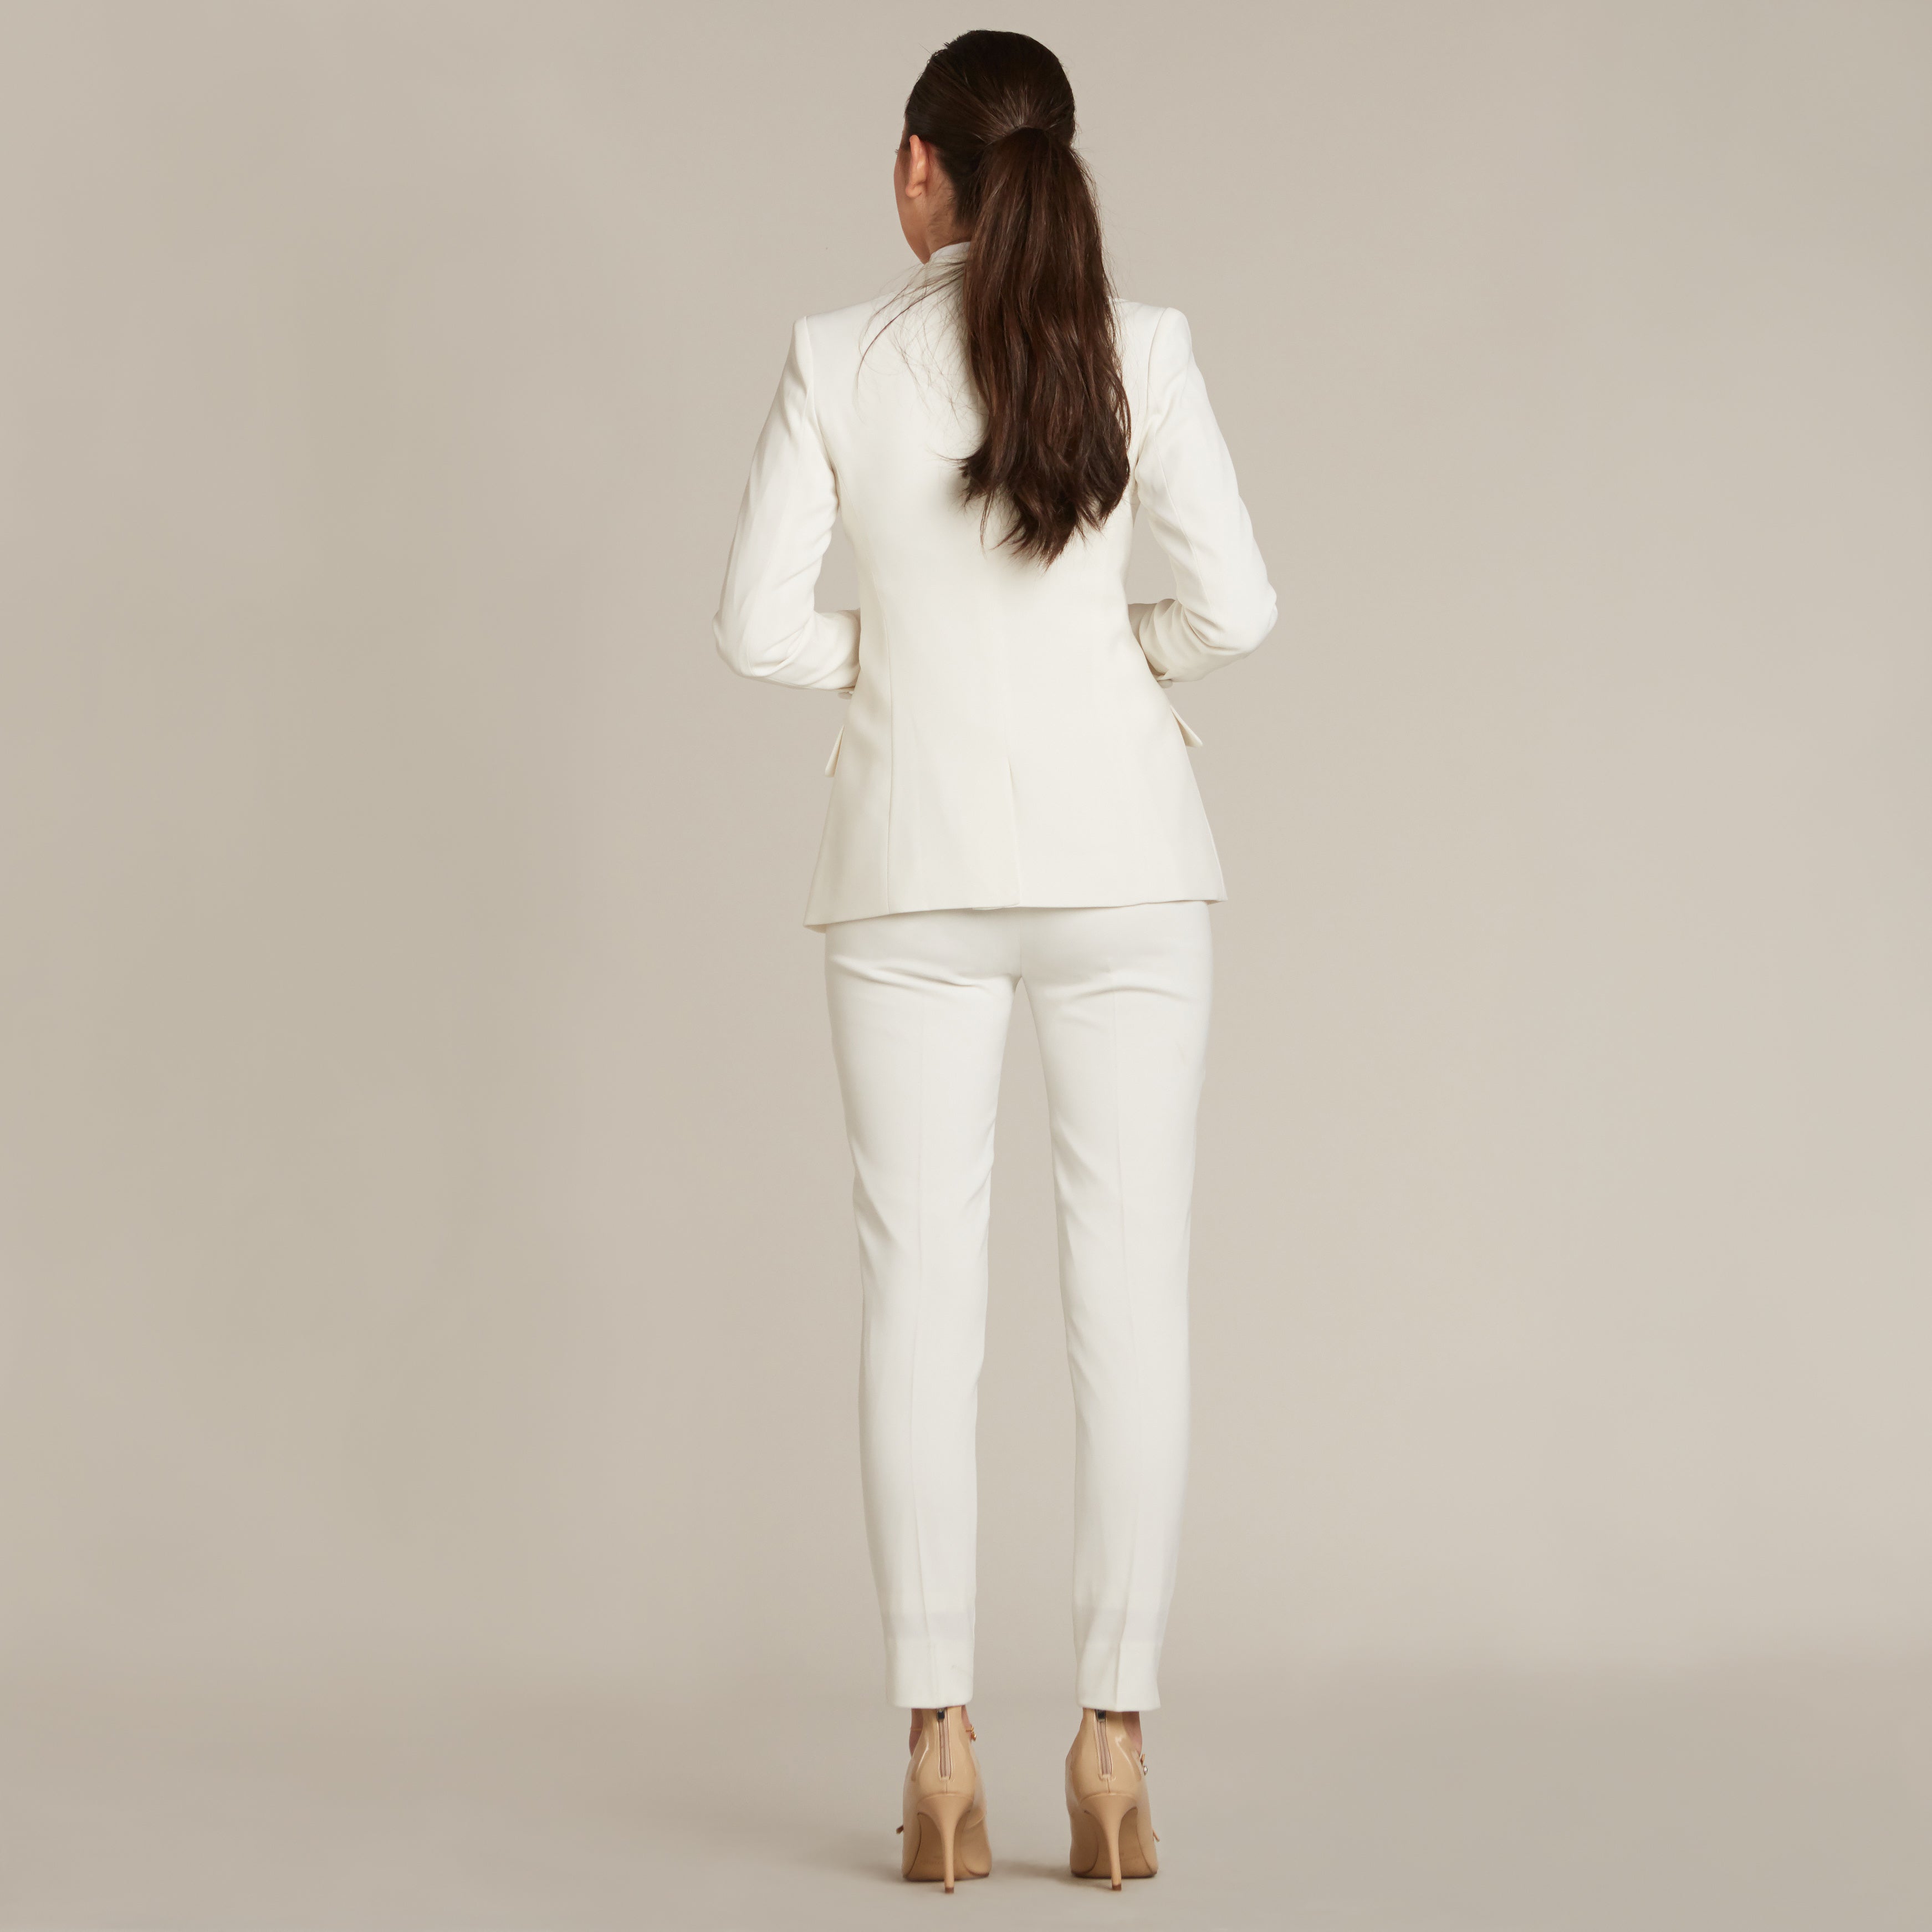 Women's Work Suit Office 2-piece Set Business Double Breasted Blazer Coat  Pants | eBay